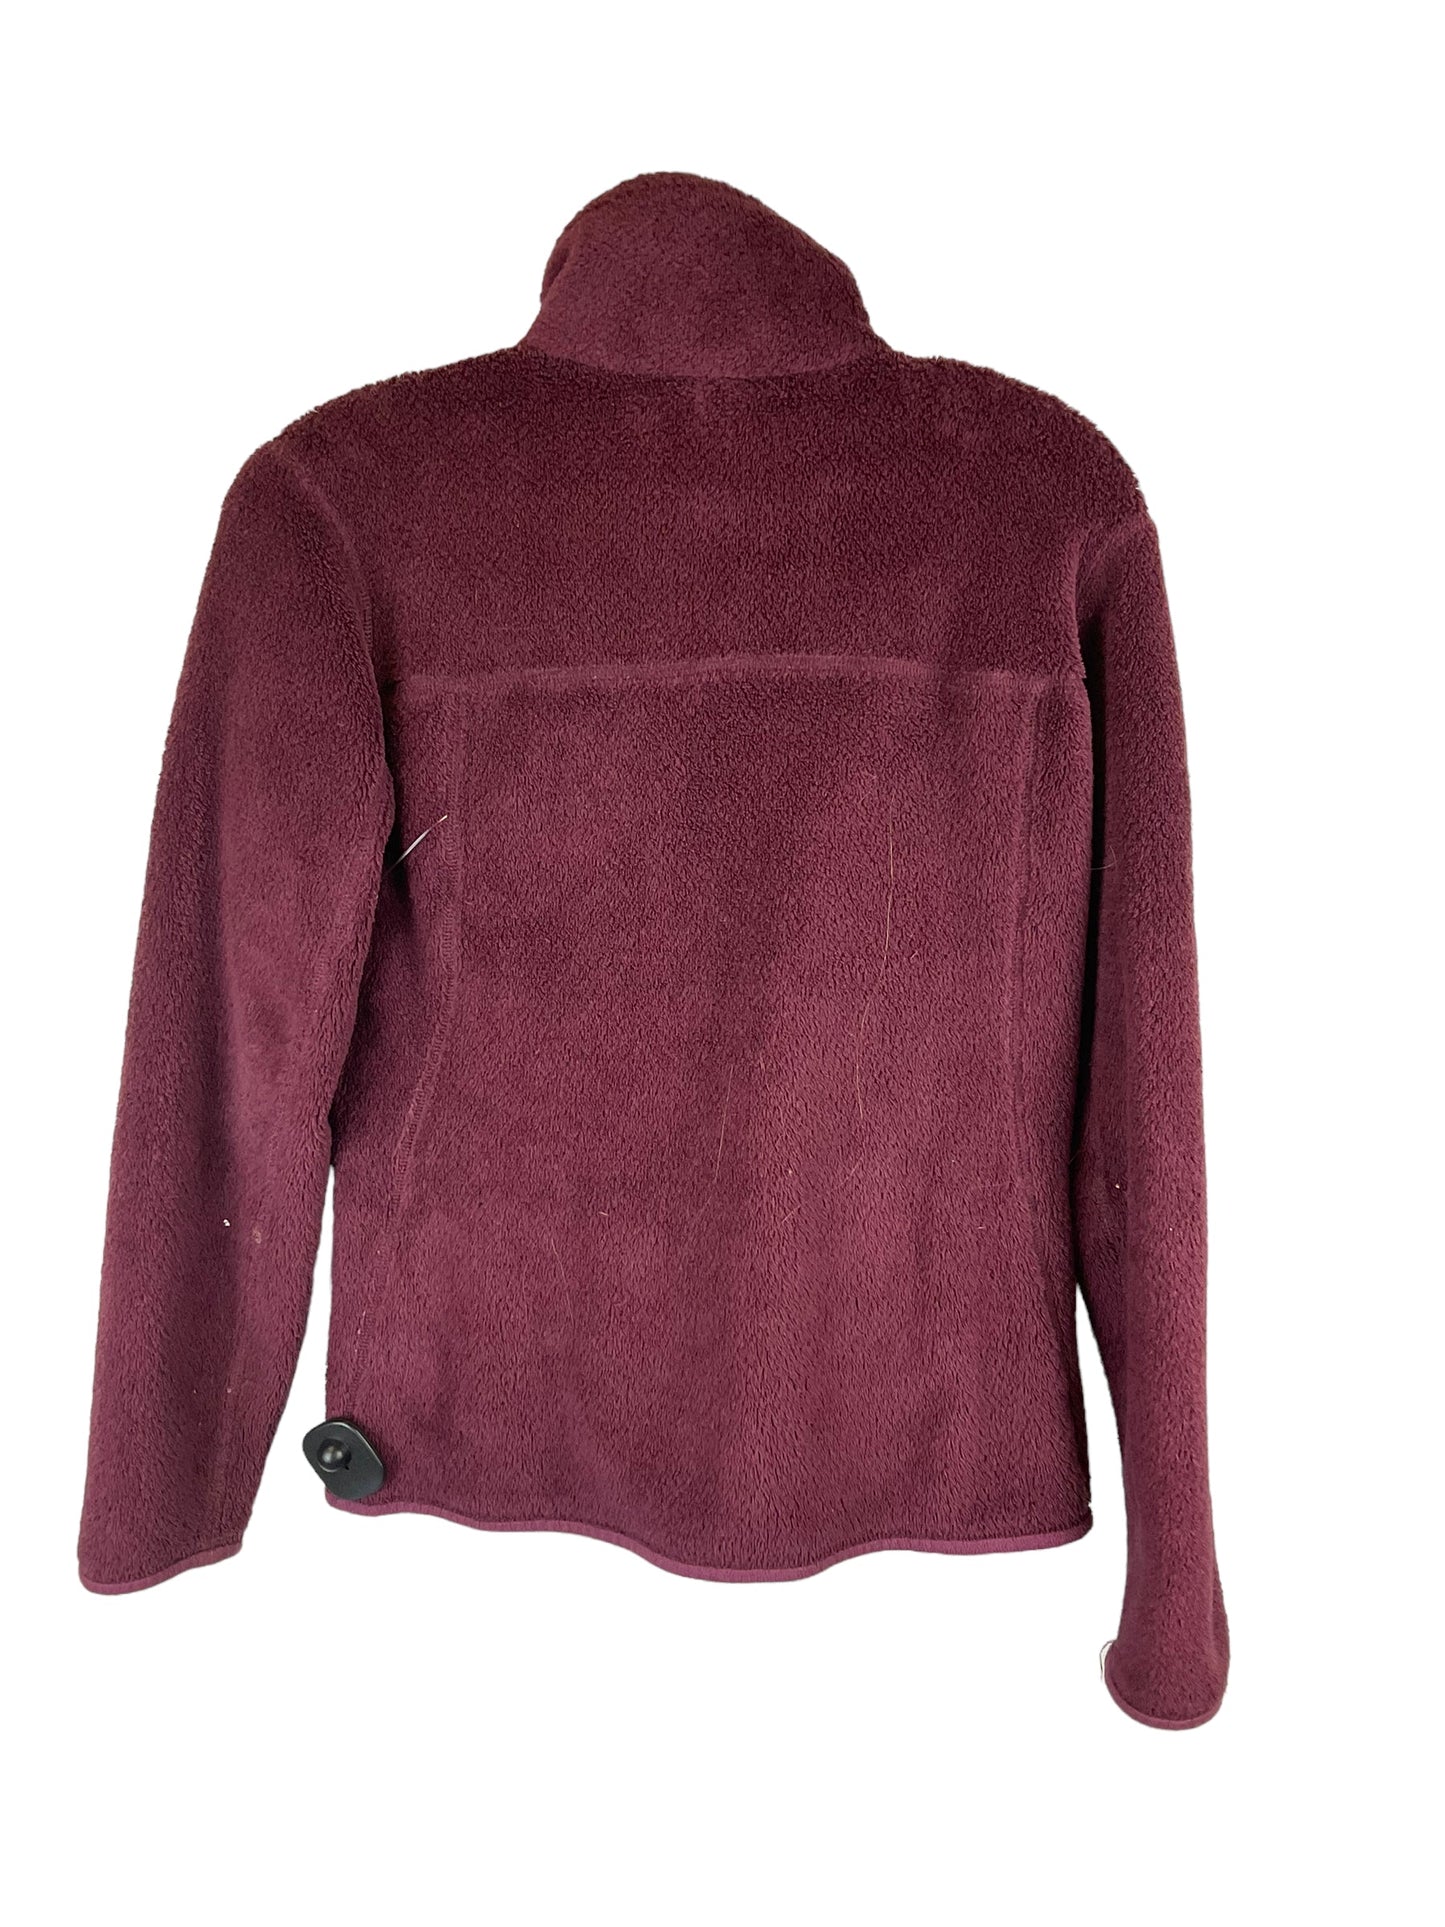 Jacket Fleece By Patagonia  Size: Xs